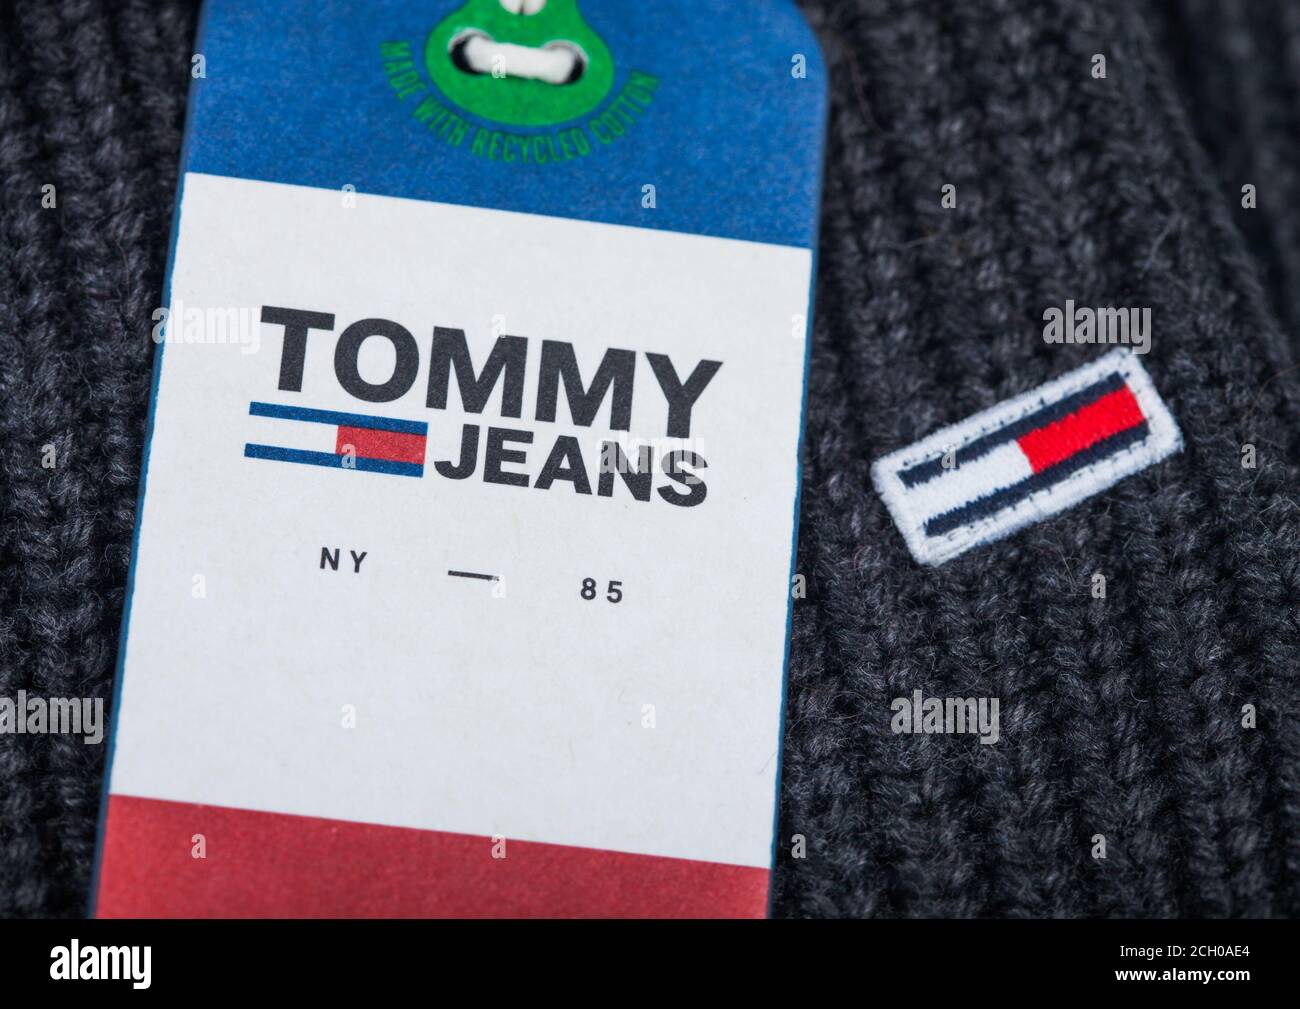 LONDON, UK - 09, 2020:Tommy Hilfiger logo and clothing tag on grey wool fabric Stock Photo - Alamy